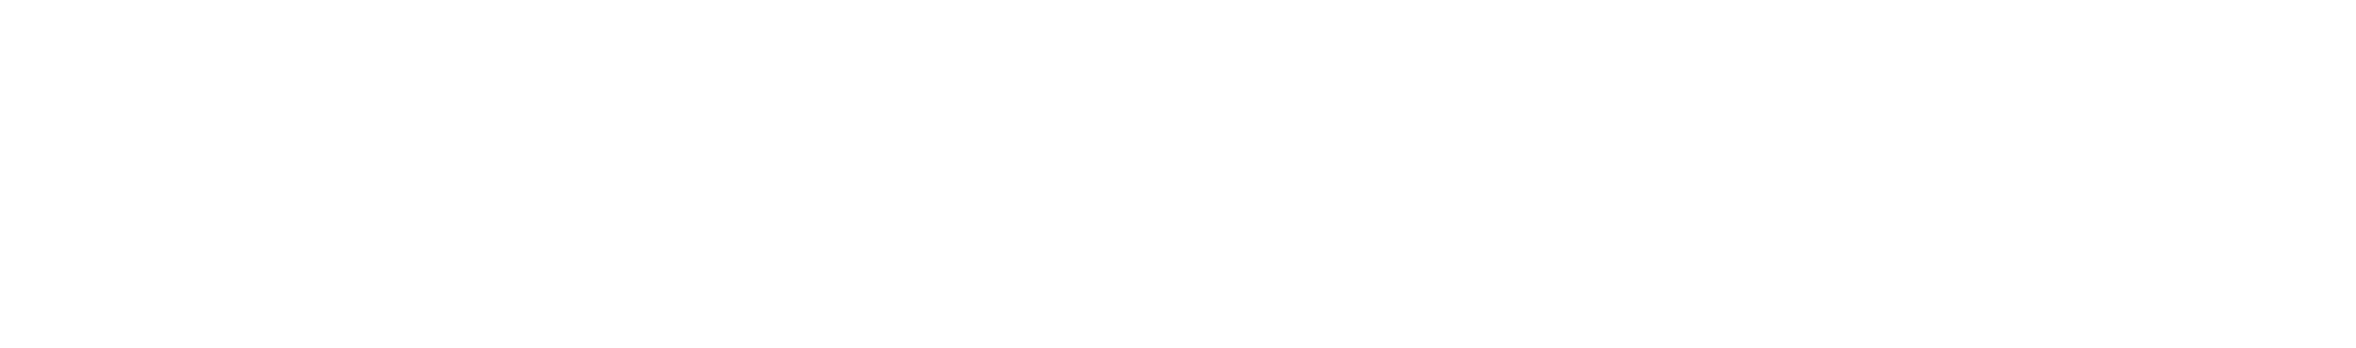 Logo de la empresa desarrolladora de apps Abalit Technologies